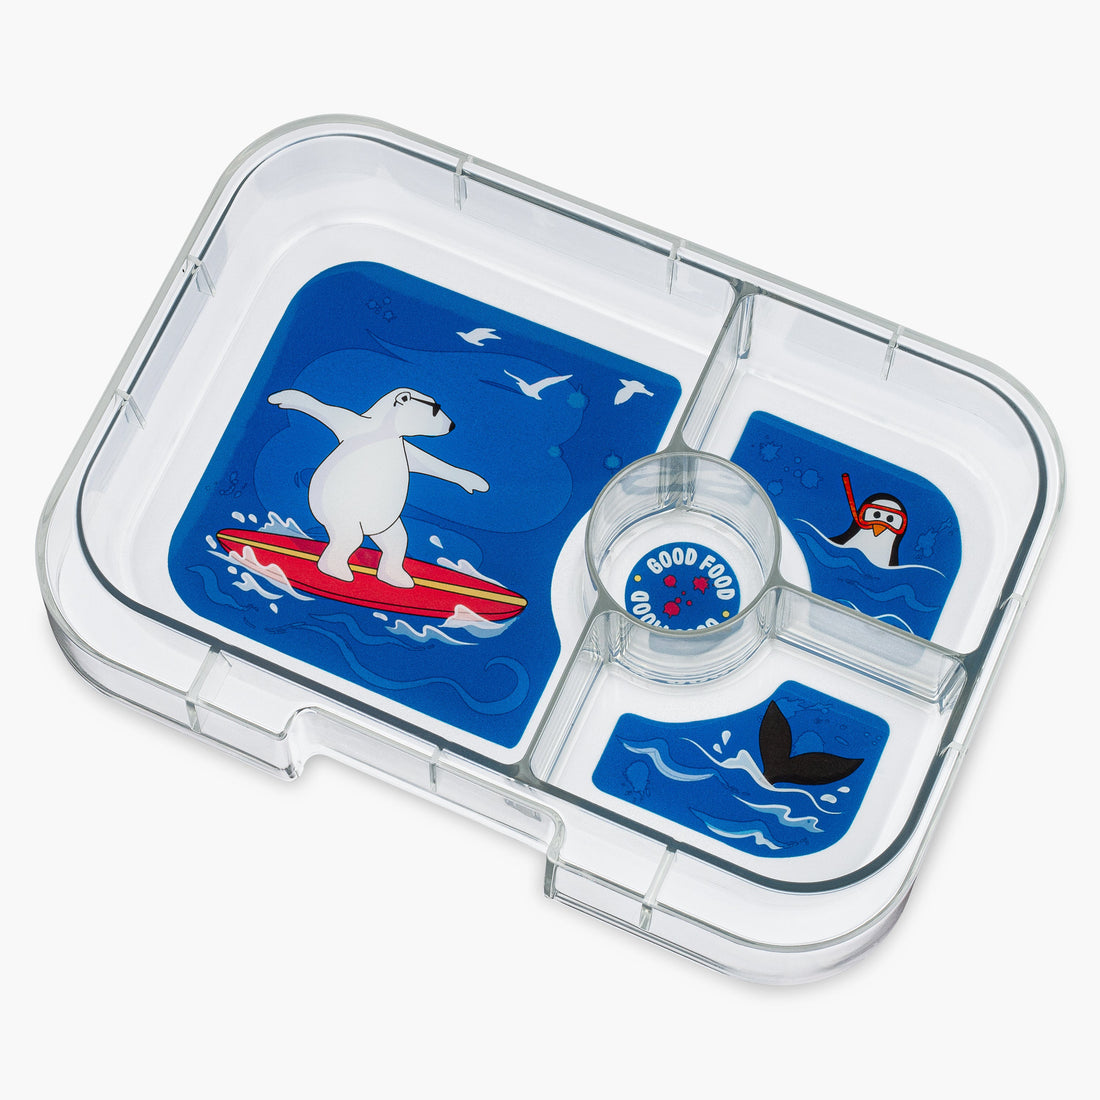 yumbox-panino-4-compartment-lunch-box-roar-red-polar-bear-yumb-rrii202210pb- (2)